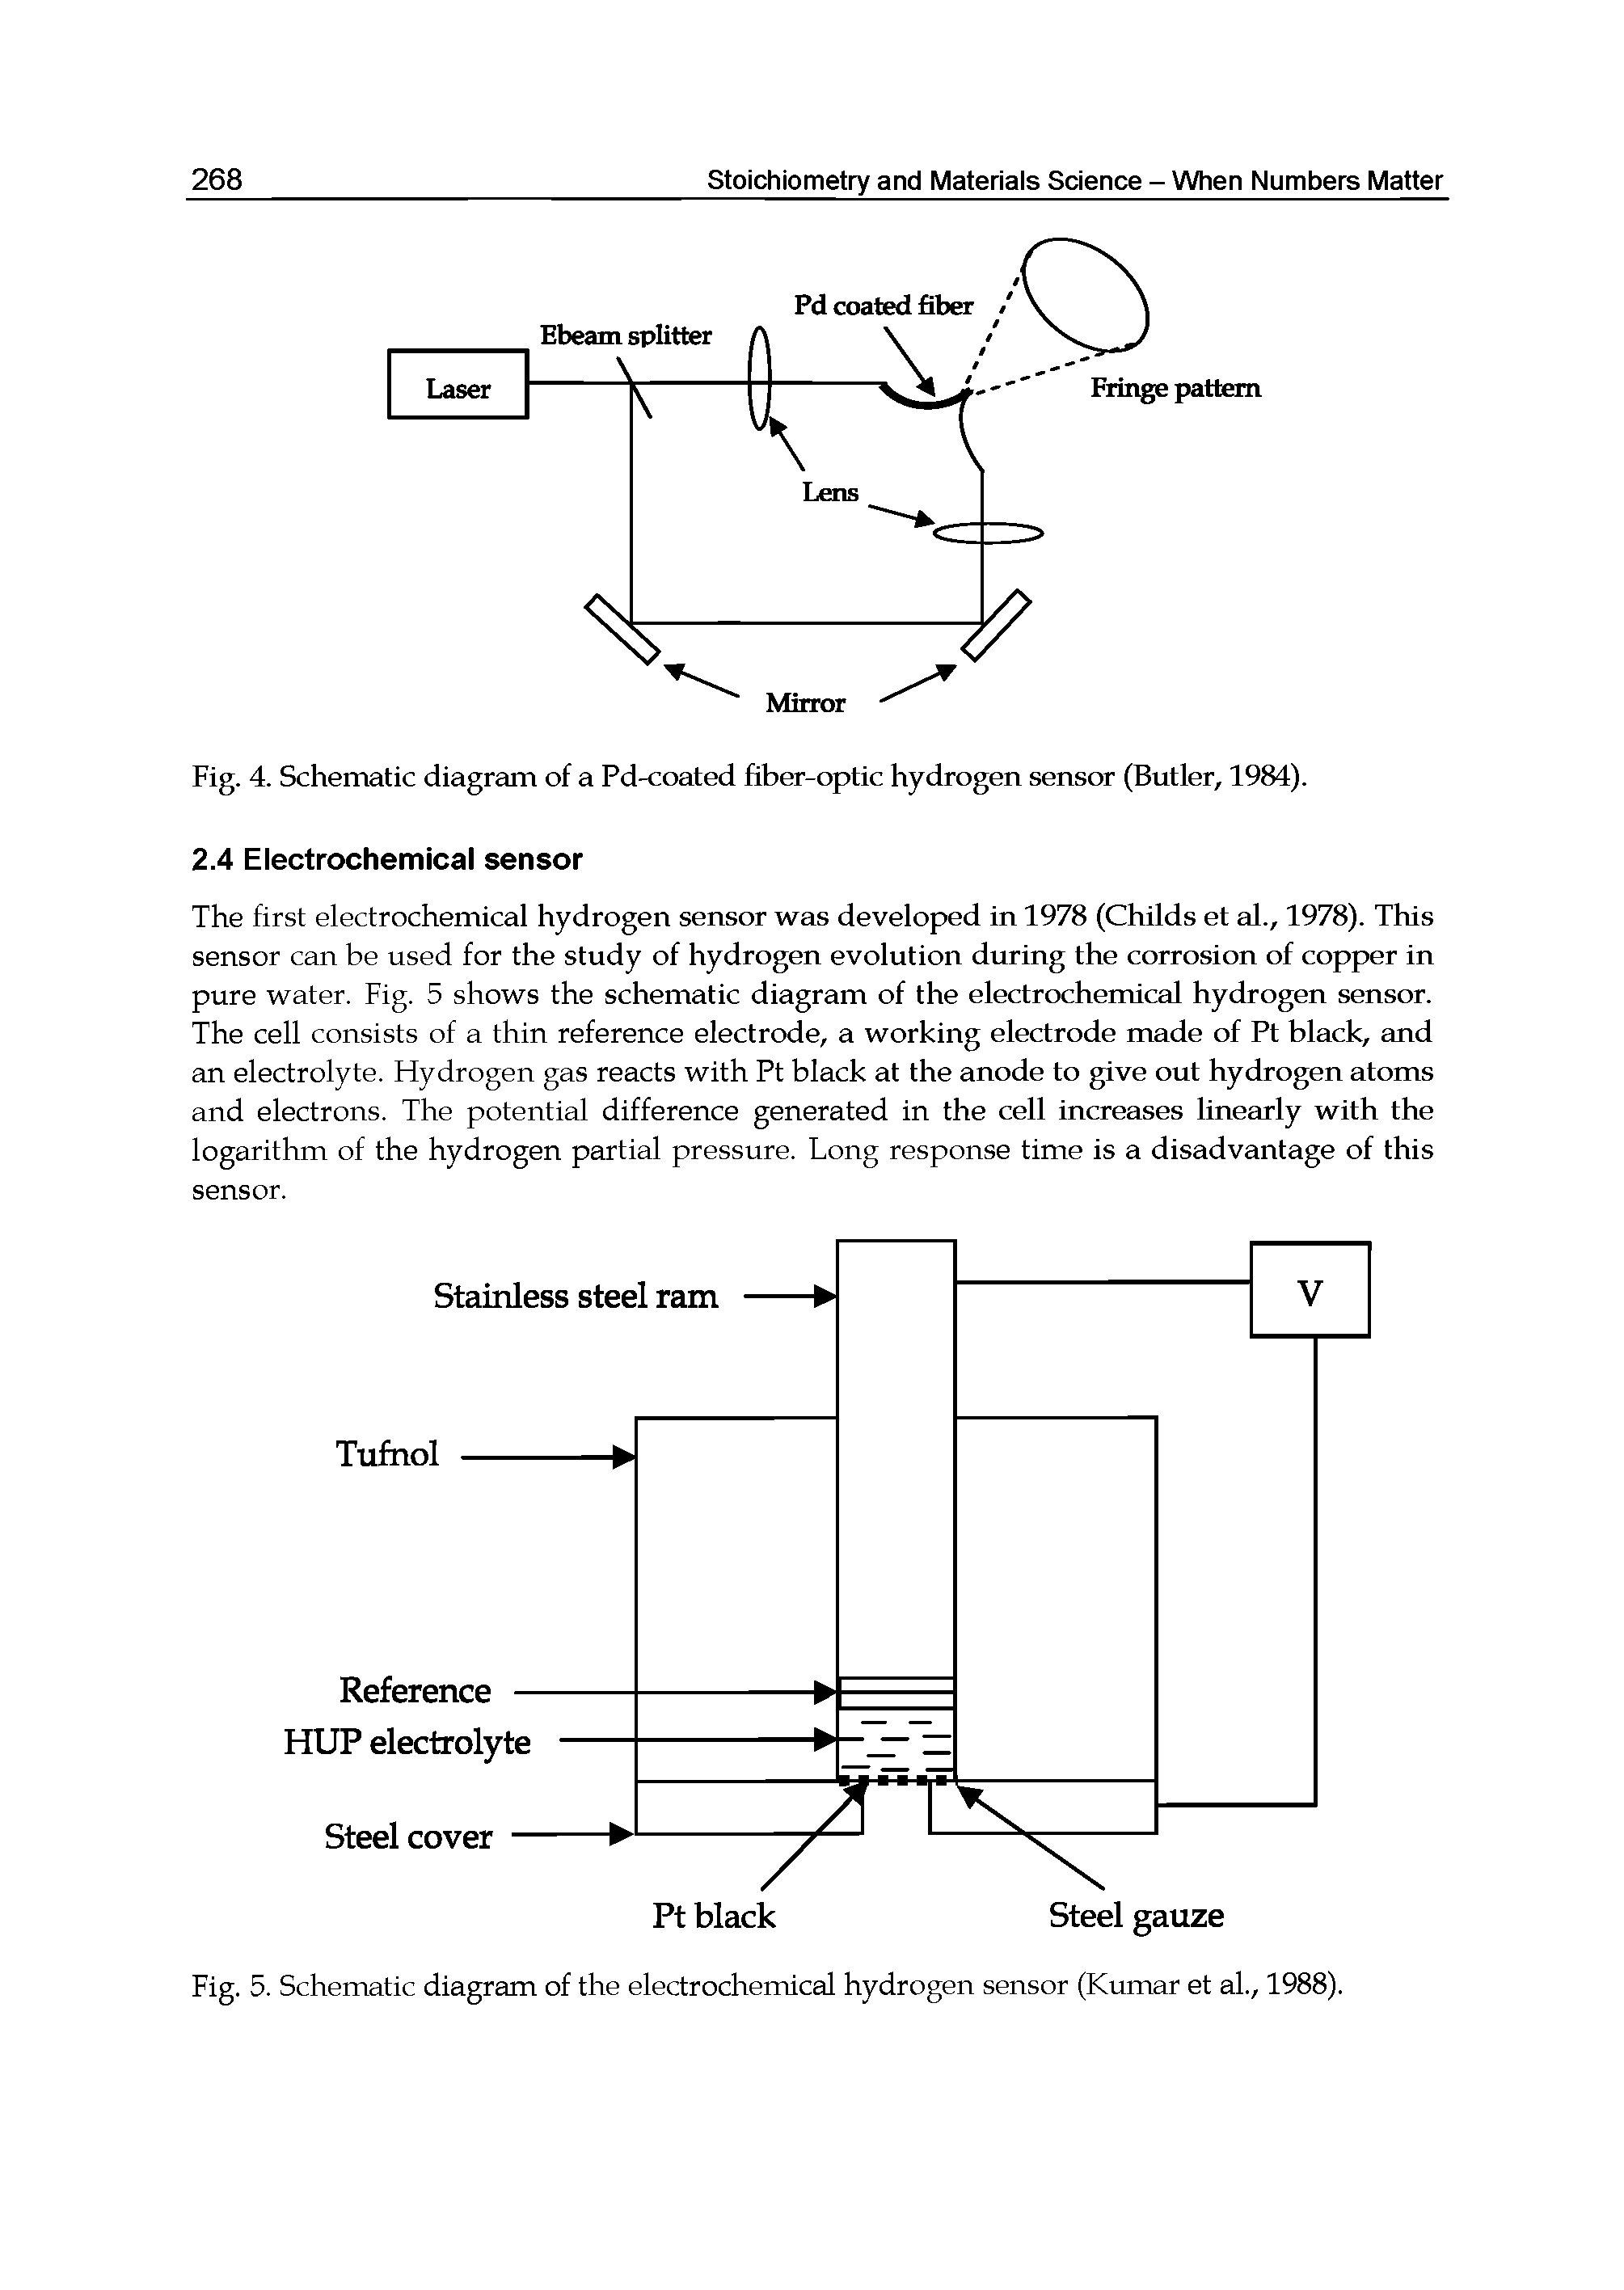 Fig. 4. Schematic diagram of a Pd-coated fiber-optic hydrogen sensor (Butler, 1984).